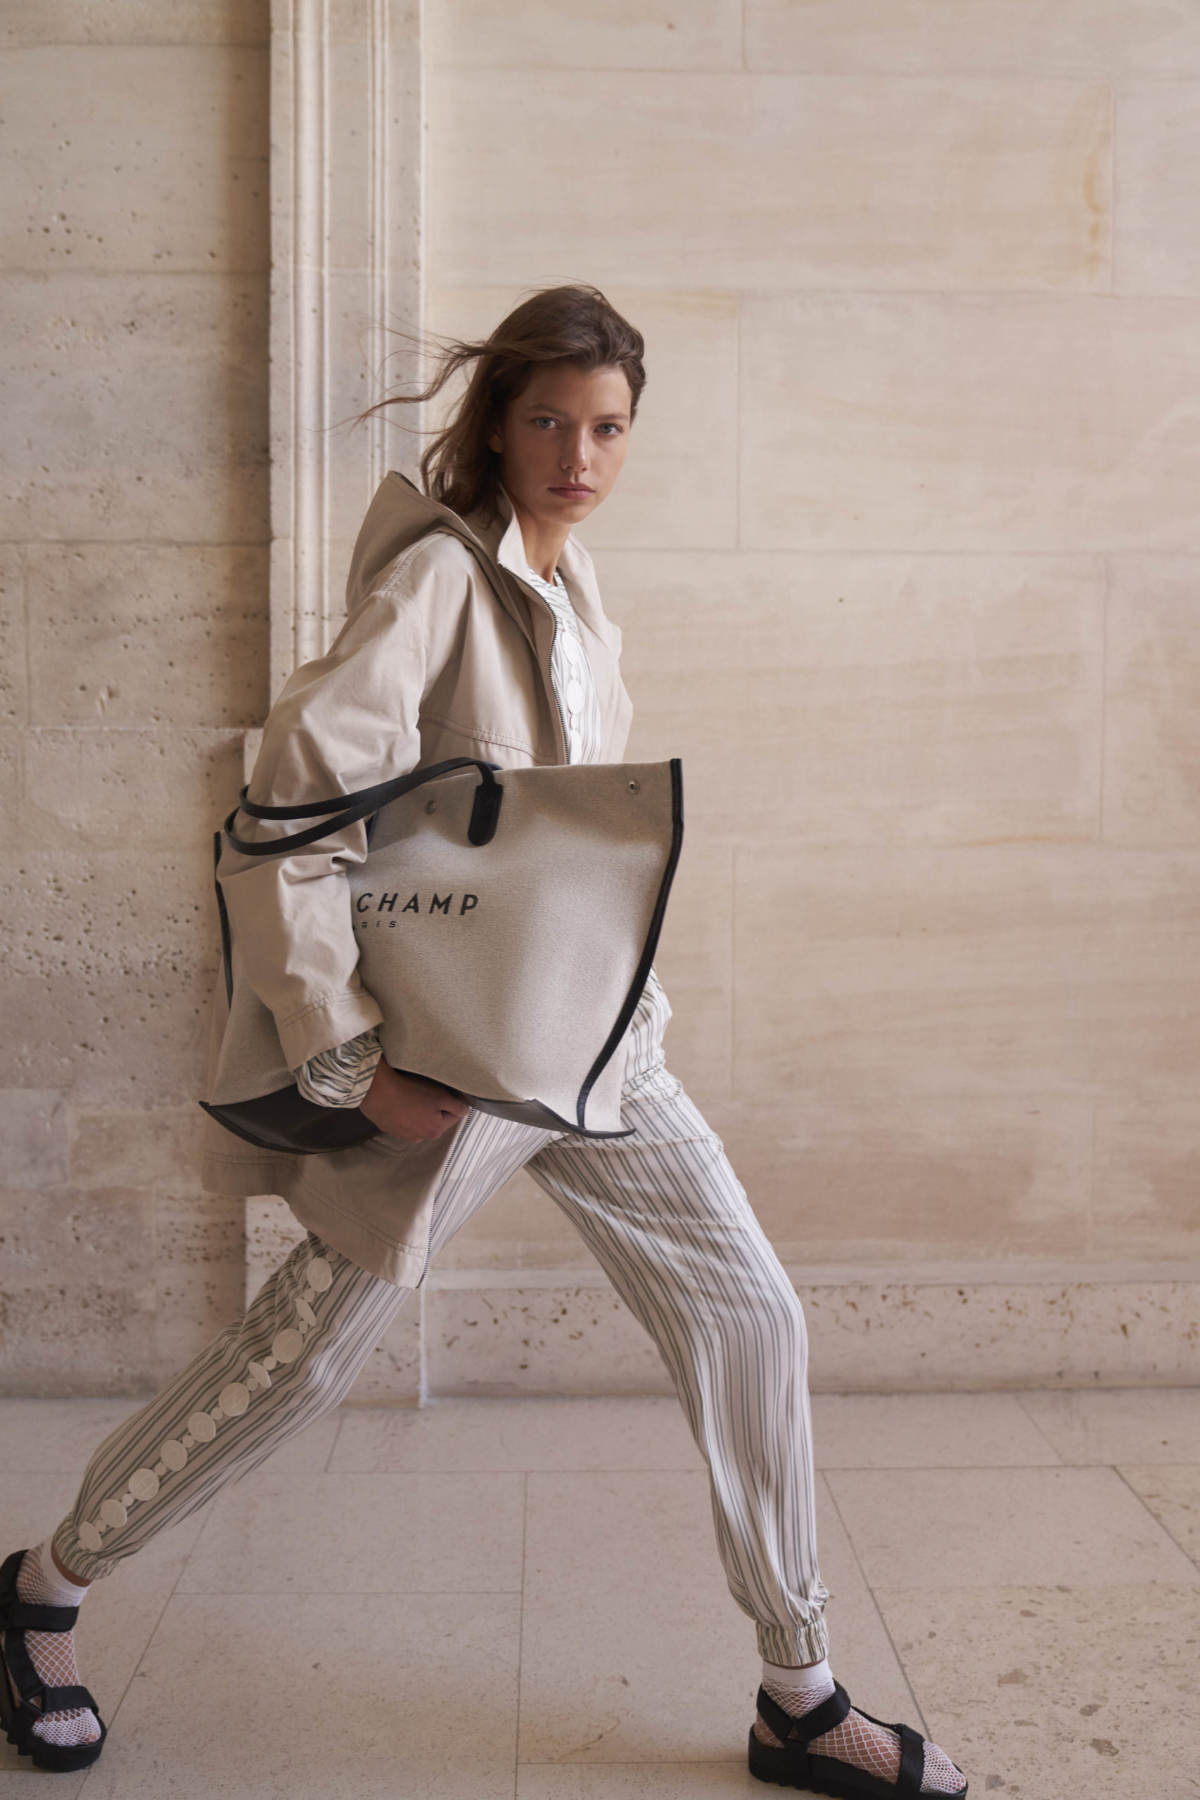 Longchamp Spring & Summer 2021 Collection - An Ode To Parisian Femininity